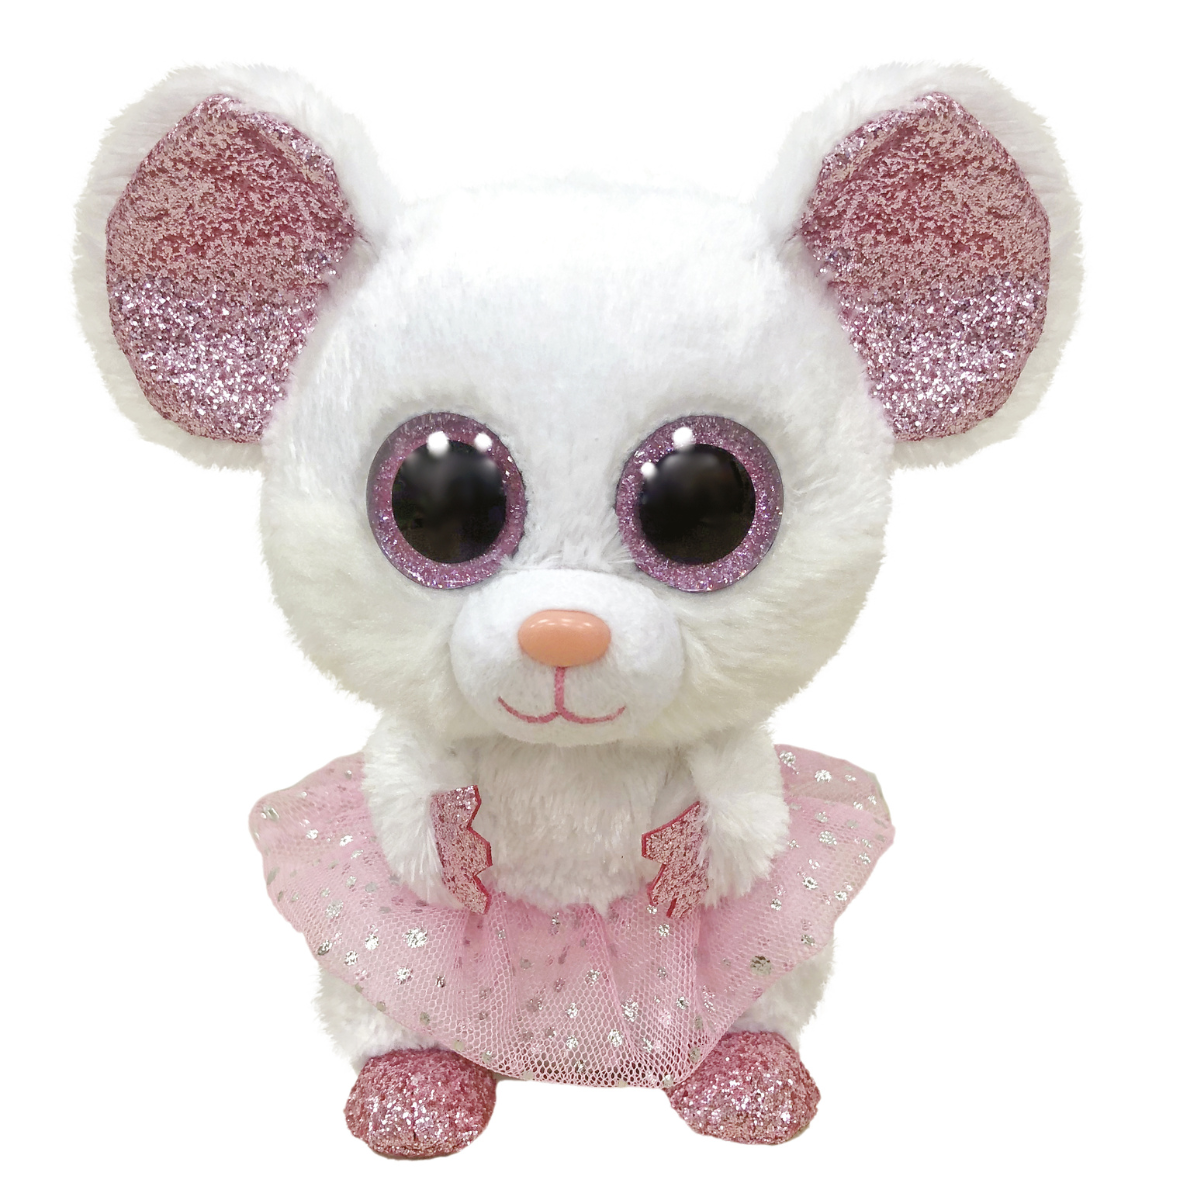 Ty - peluche - beanie boos - topolina ballerina - nina - bianco - occhioni zampine orecchie rosa glitter - tutù rosa glitter - il peluche con gli occhi grandi scintillanti - 15 cm - 36365 - TY